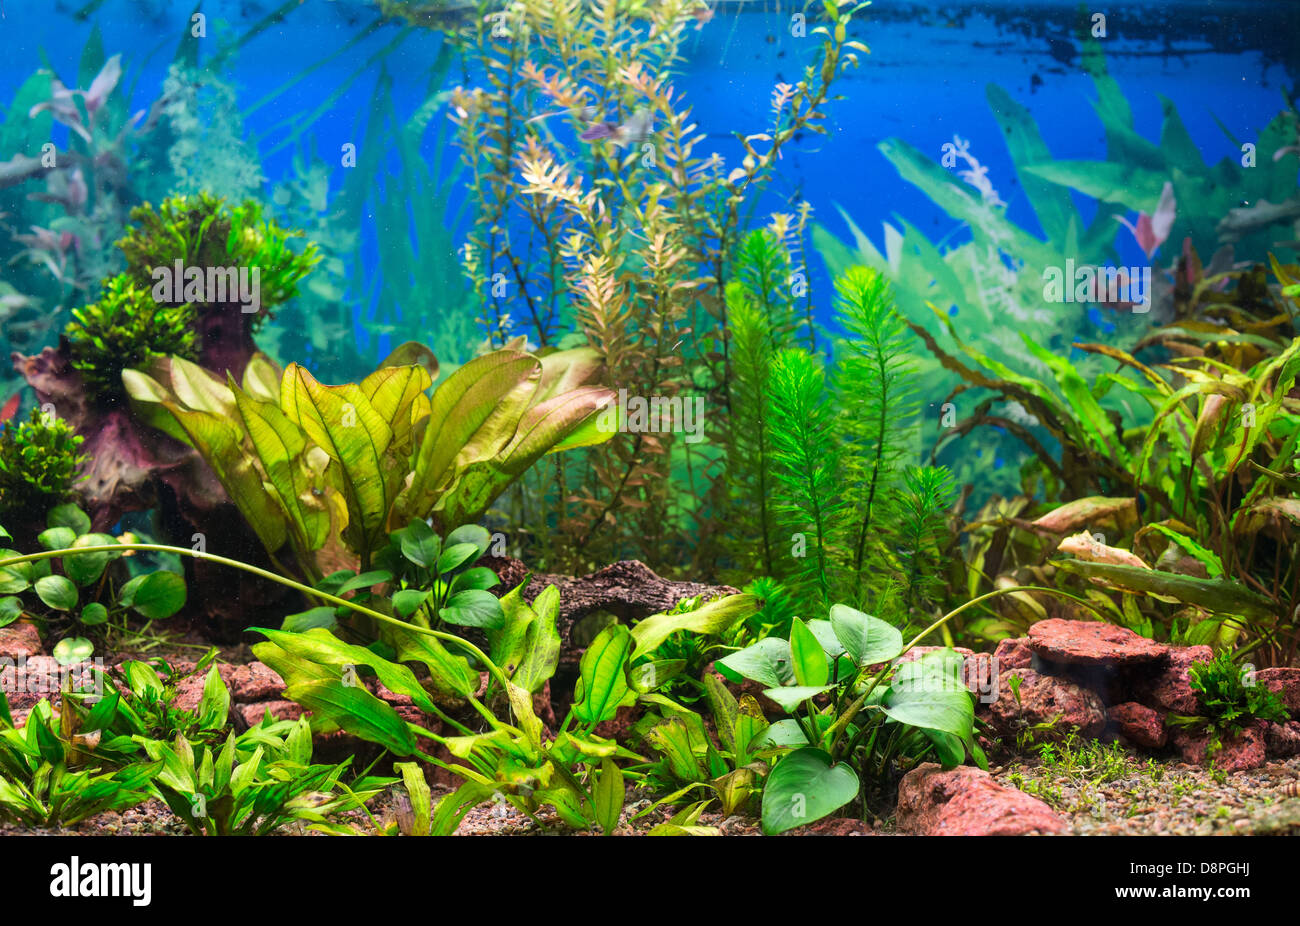 Interior aquarium. A green plant tropical freshwater aquarium Stock Photo